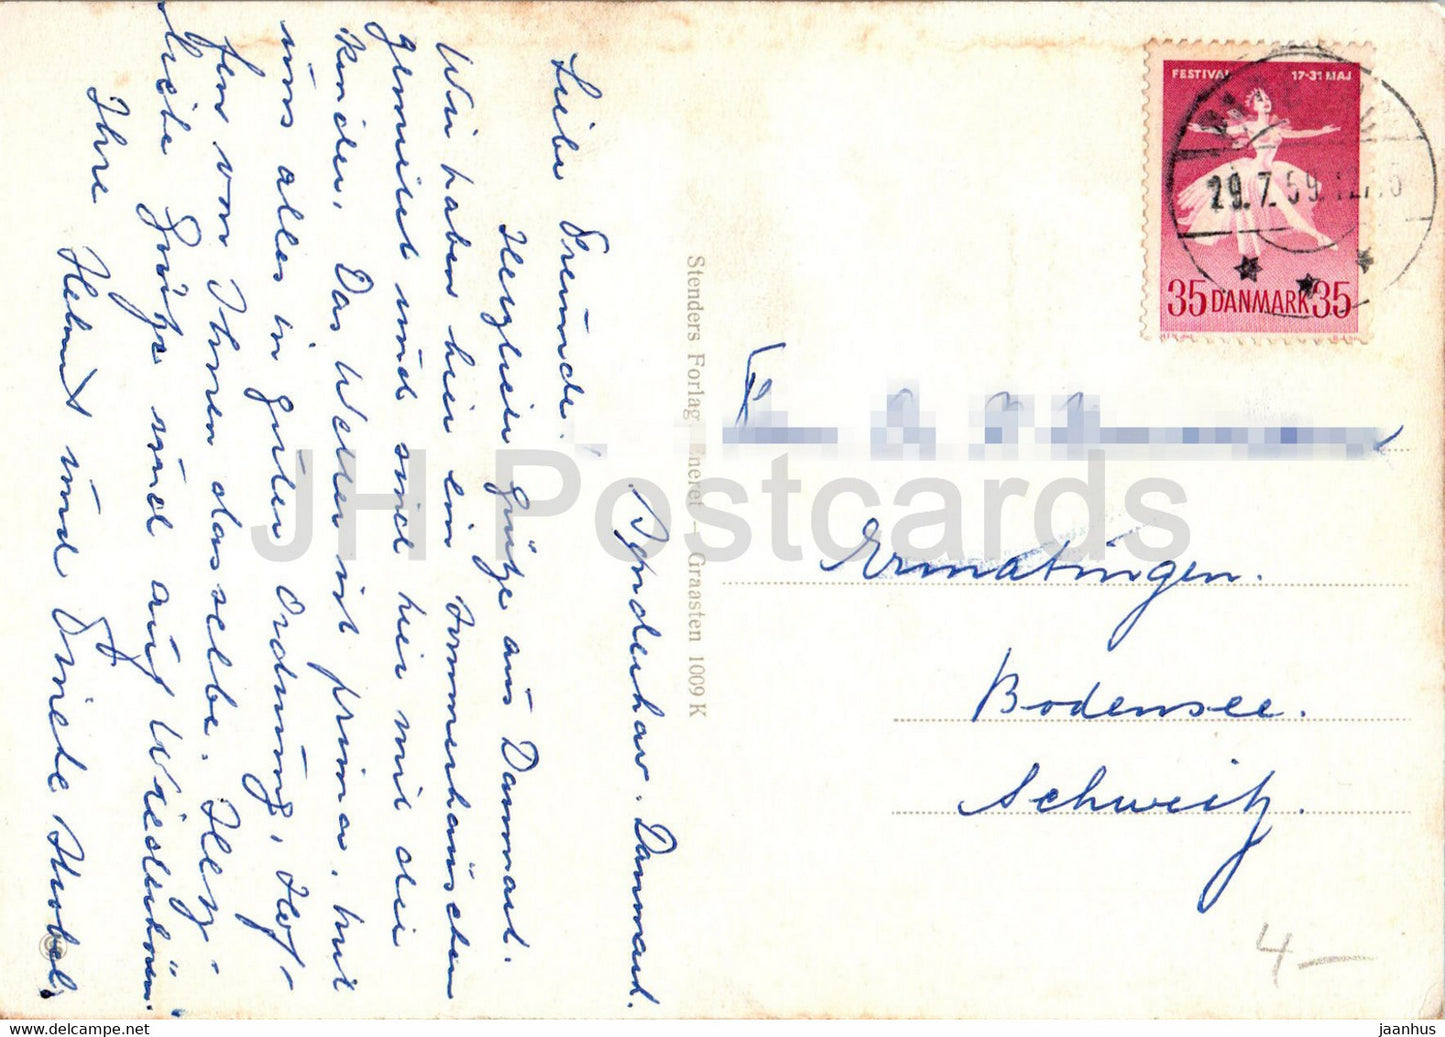 Graasten Slot - Schloss - alte Postkarten - 1009 - 1959 - Dänemark - gebraucht